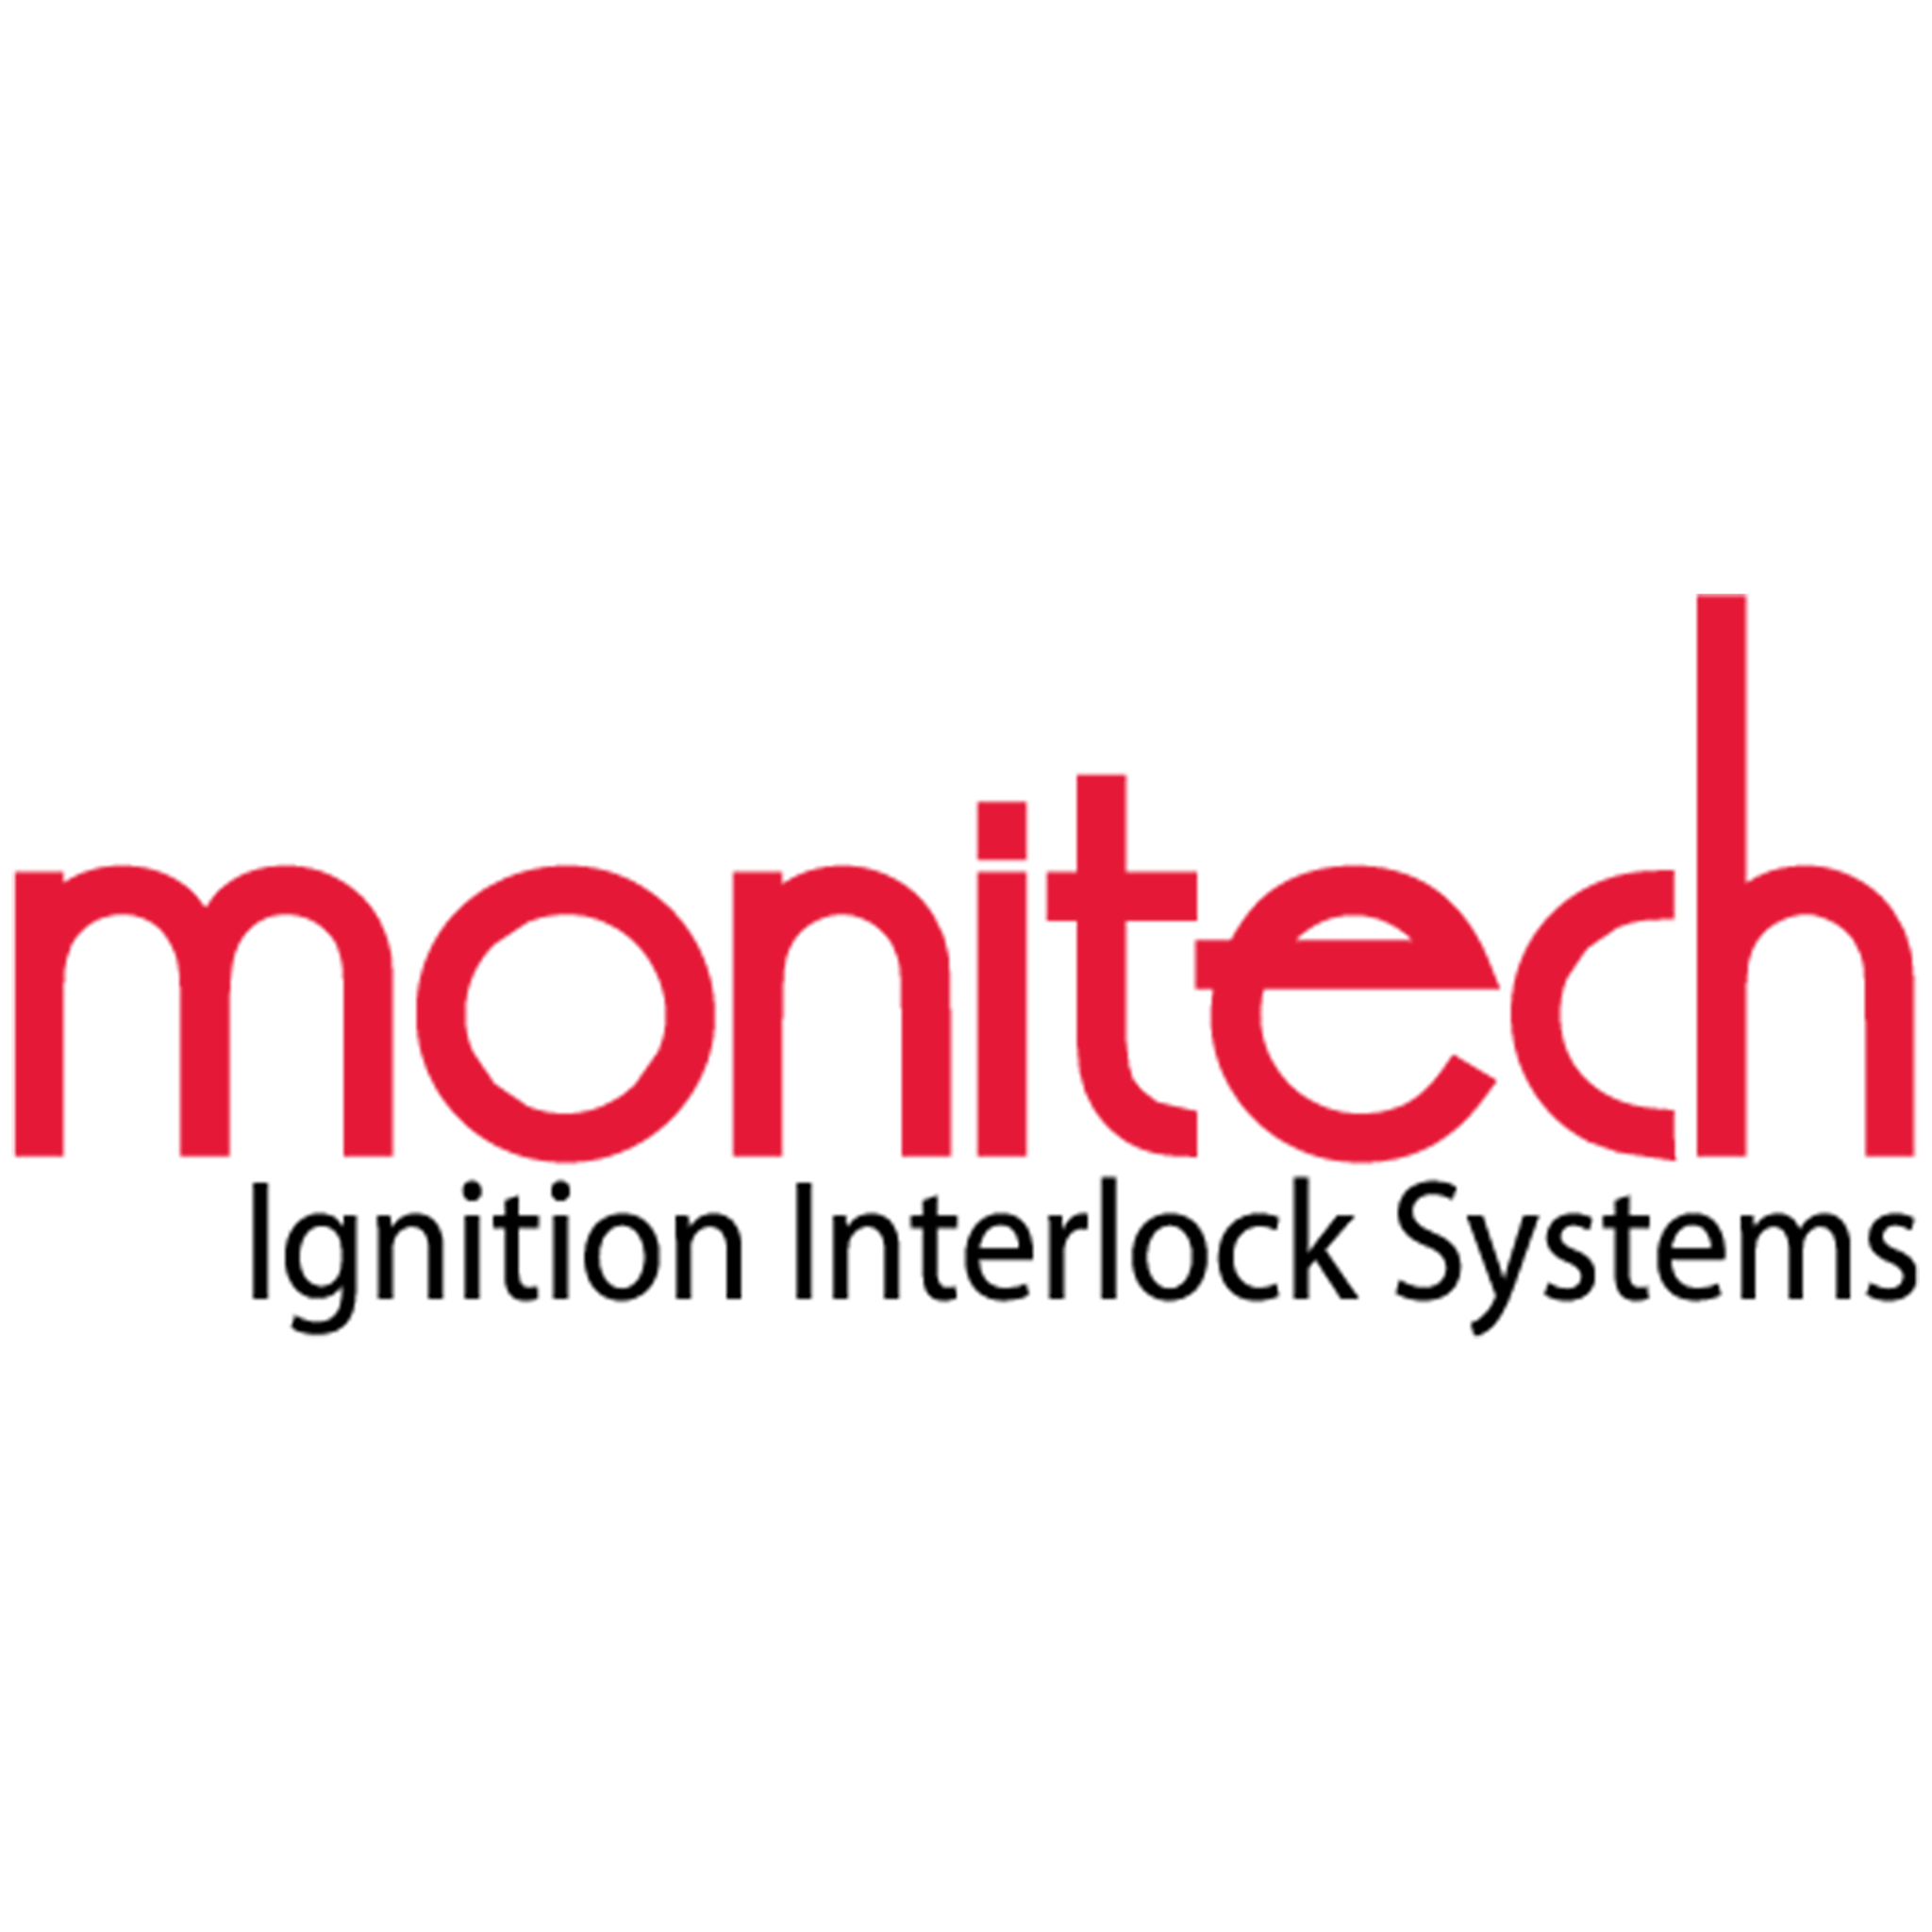 Company logo of Monitech Ignition Interlock Systems